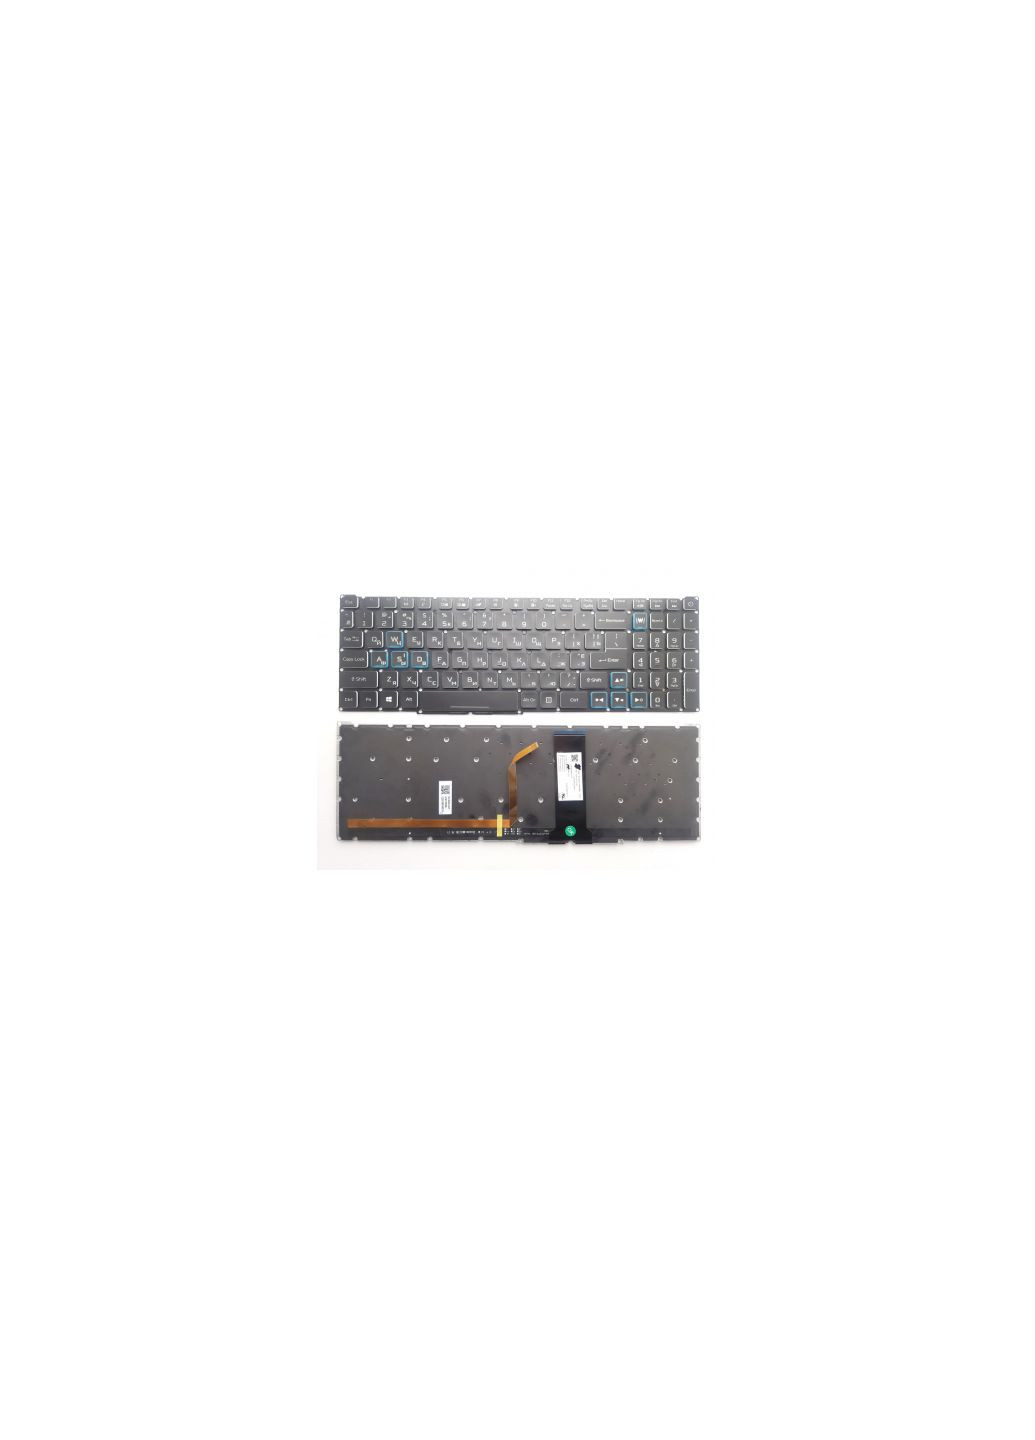 Клавиатура ноутбука Nitro 4 AN51543/AN515-54/AN517-51/AN715-51 черная с цветным п (A46210) Acer nitro 4 an515-43/an515-54/an517-51/an715-51 черна (276707557)